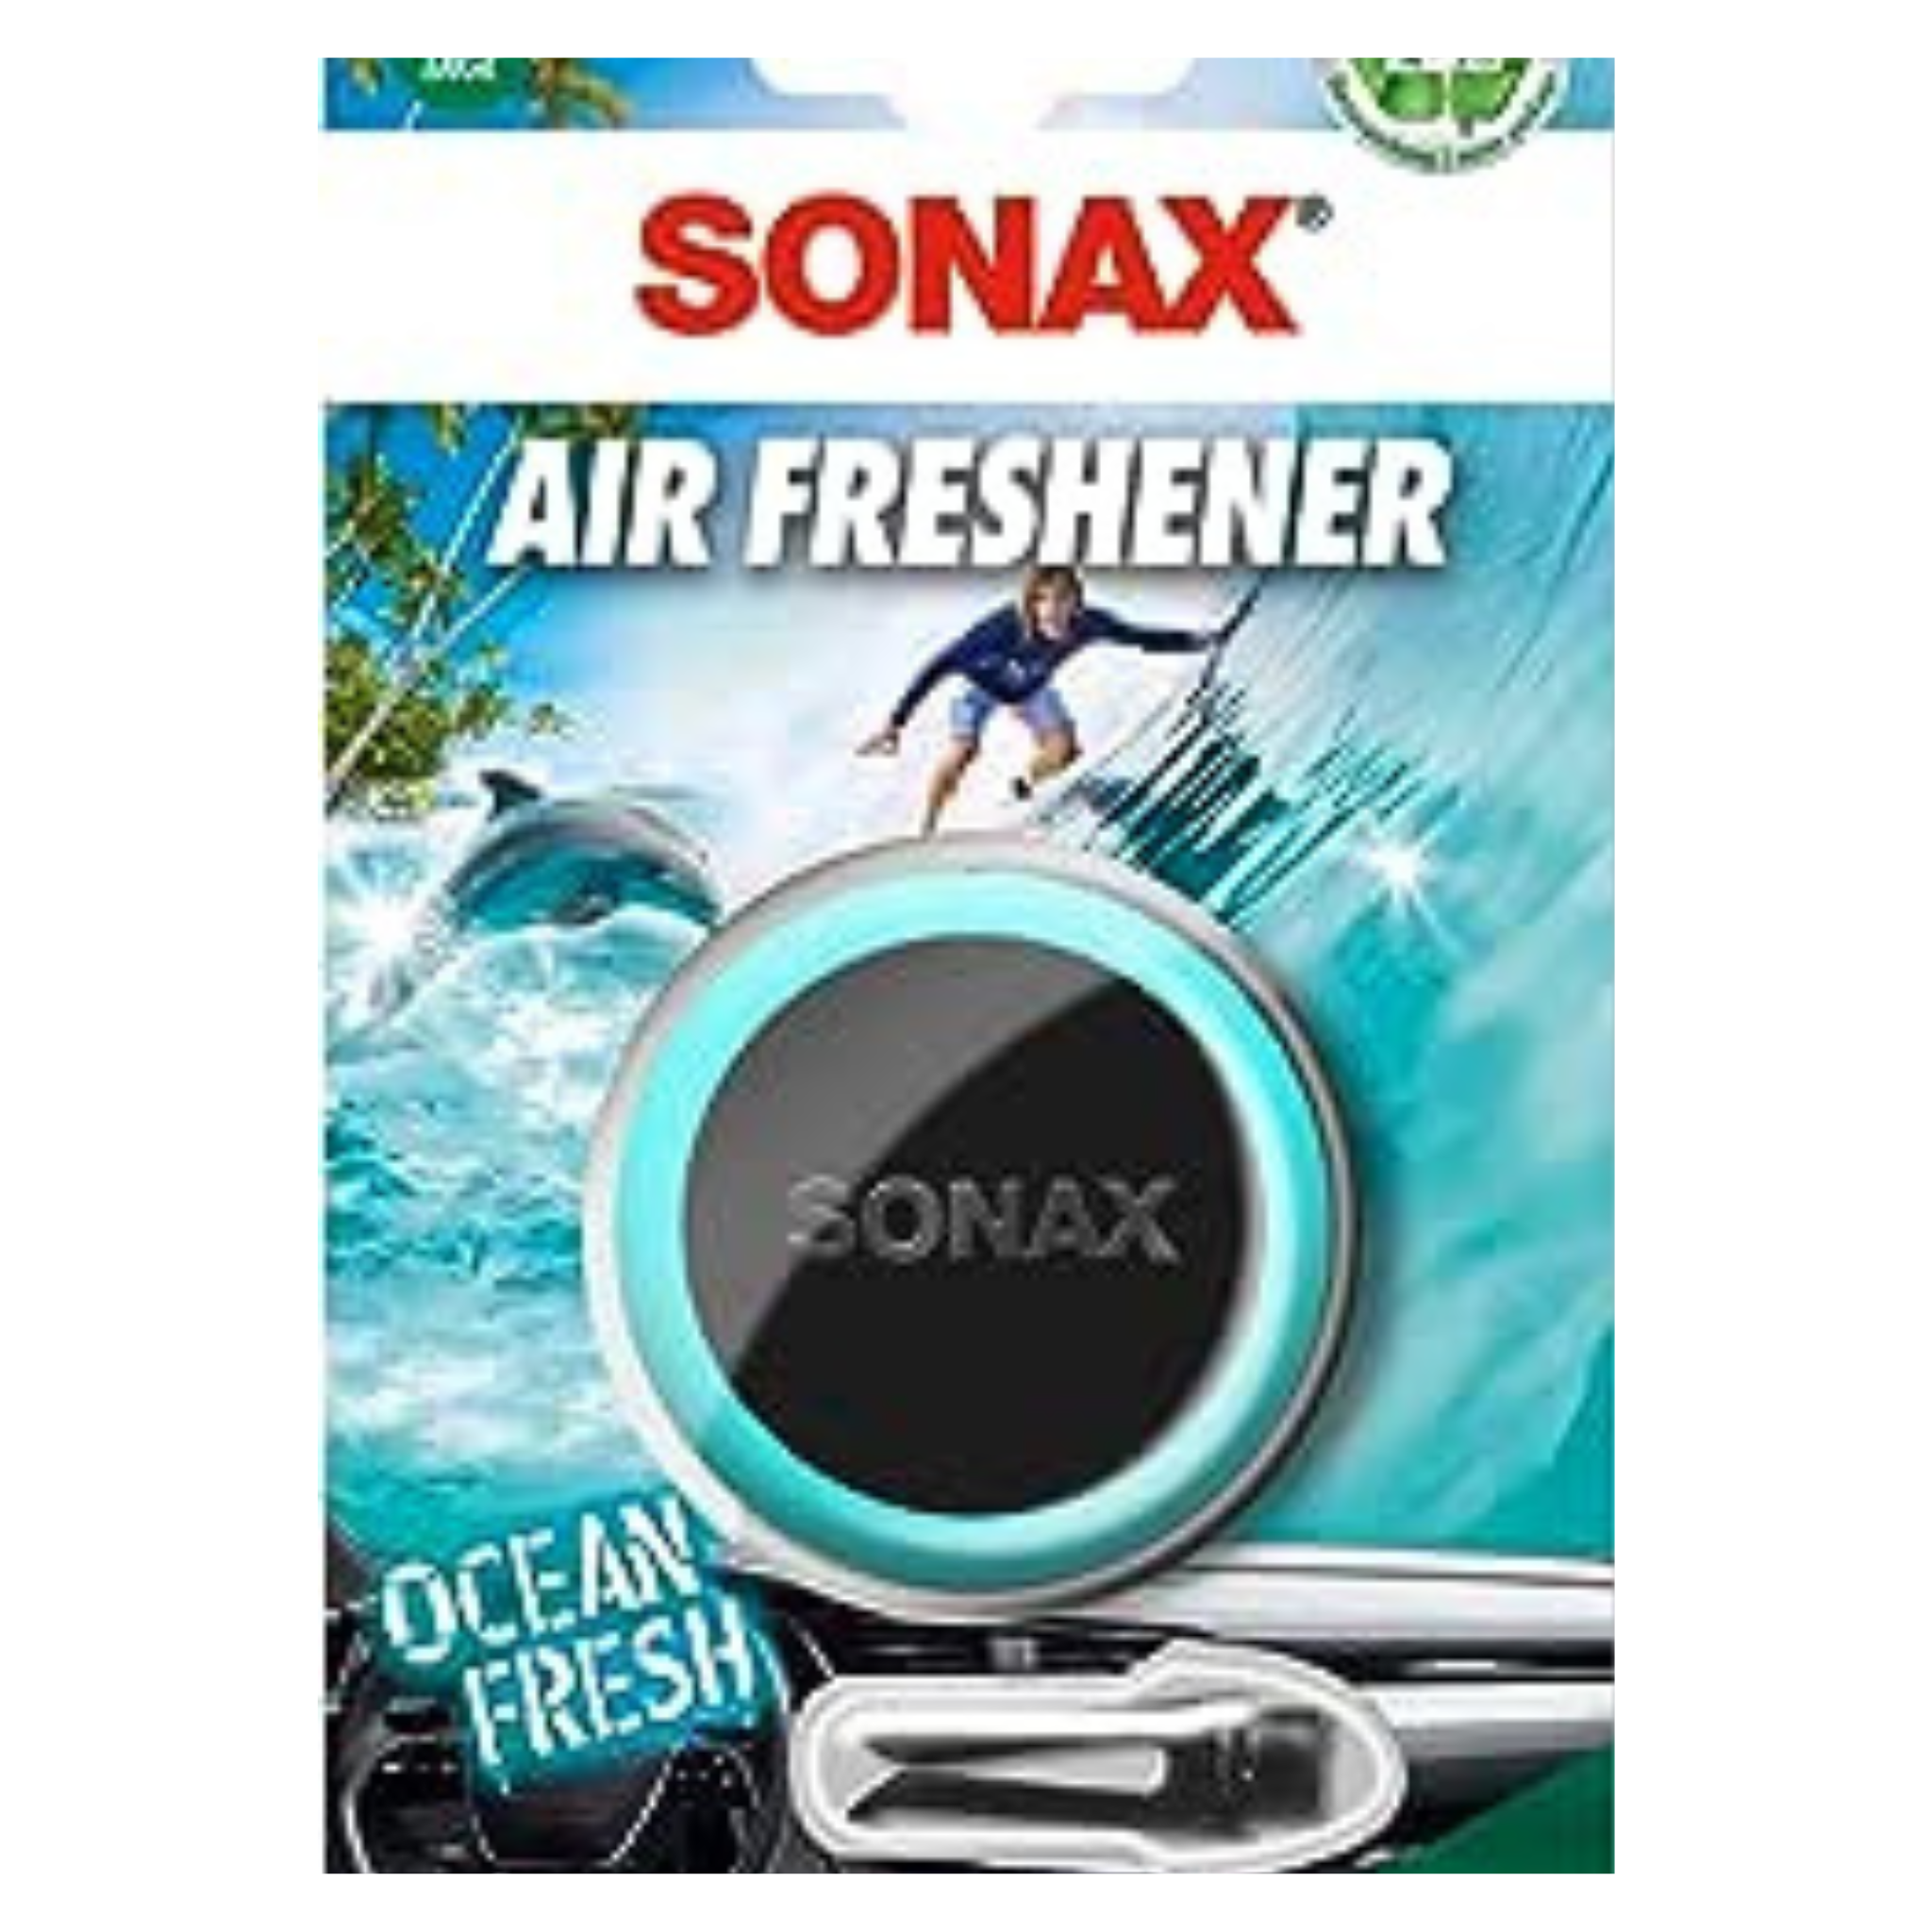 TESSI x SONAX Air Freshener Ocean-fresh